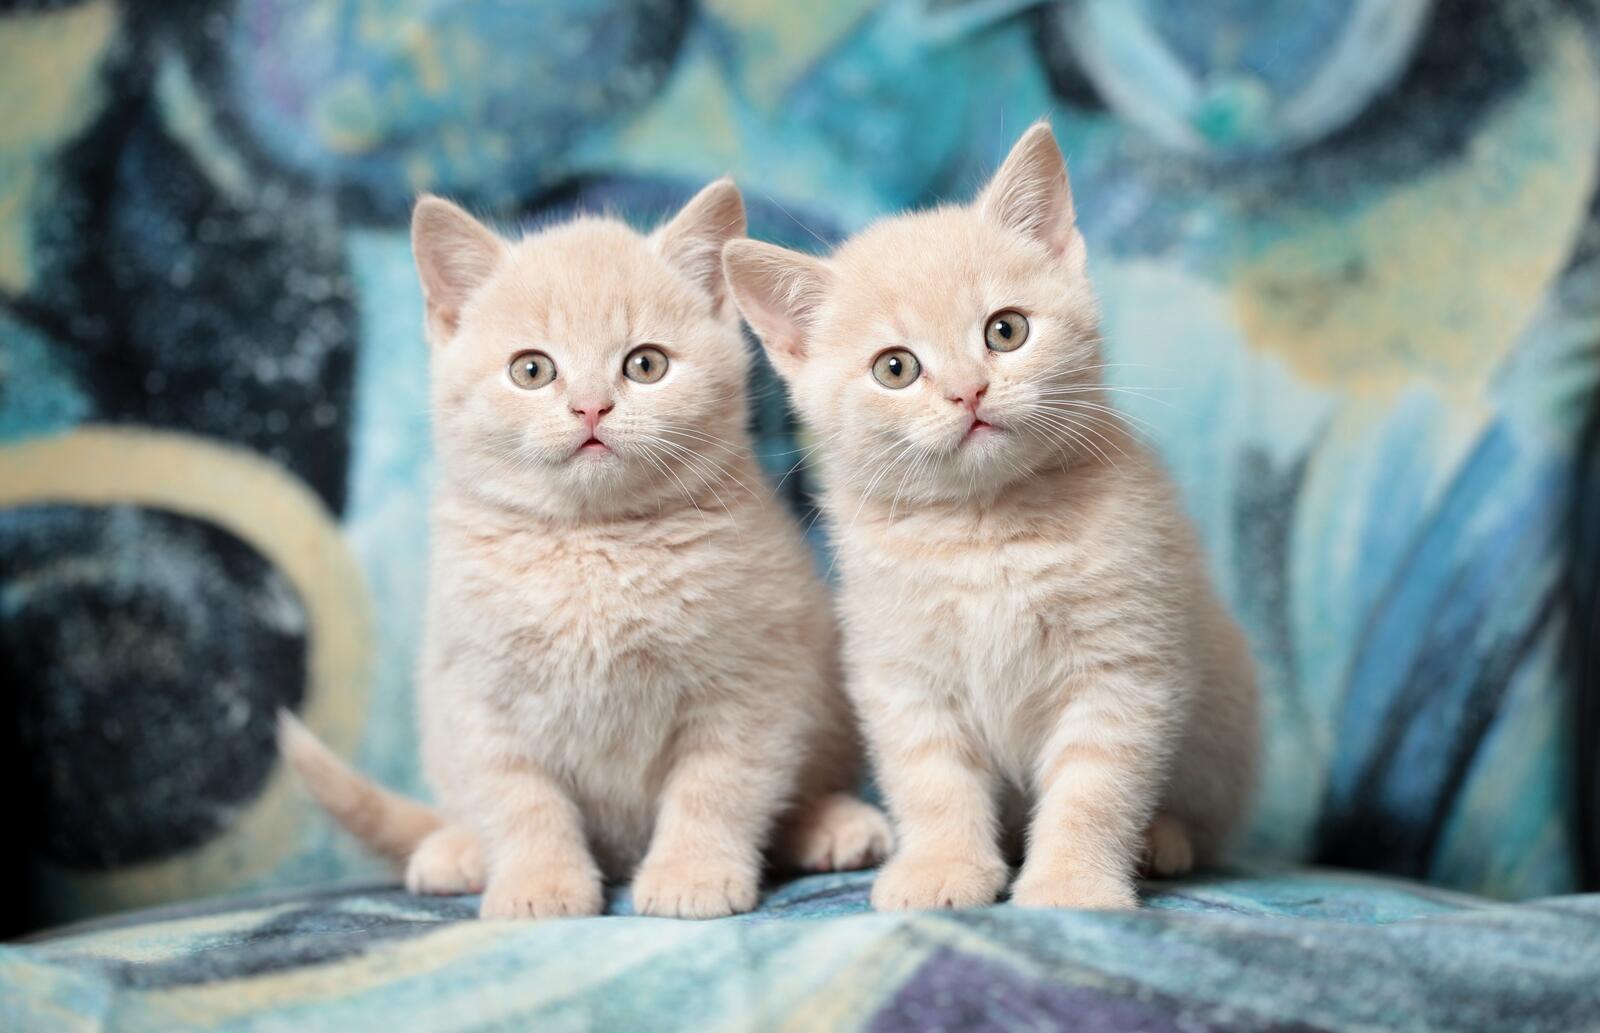 Wallpapers Kittens cat British Shorthair on the desktop